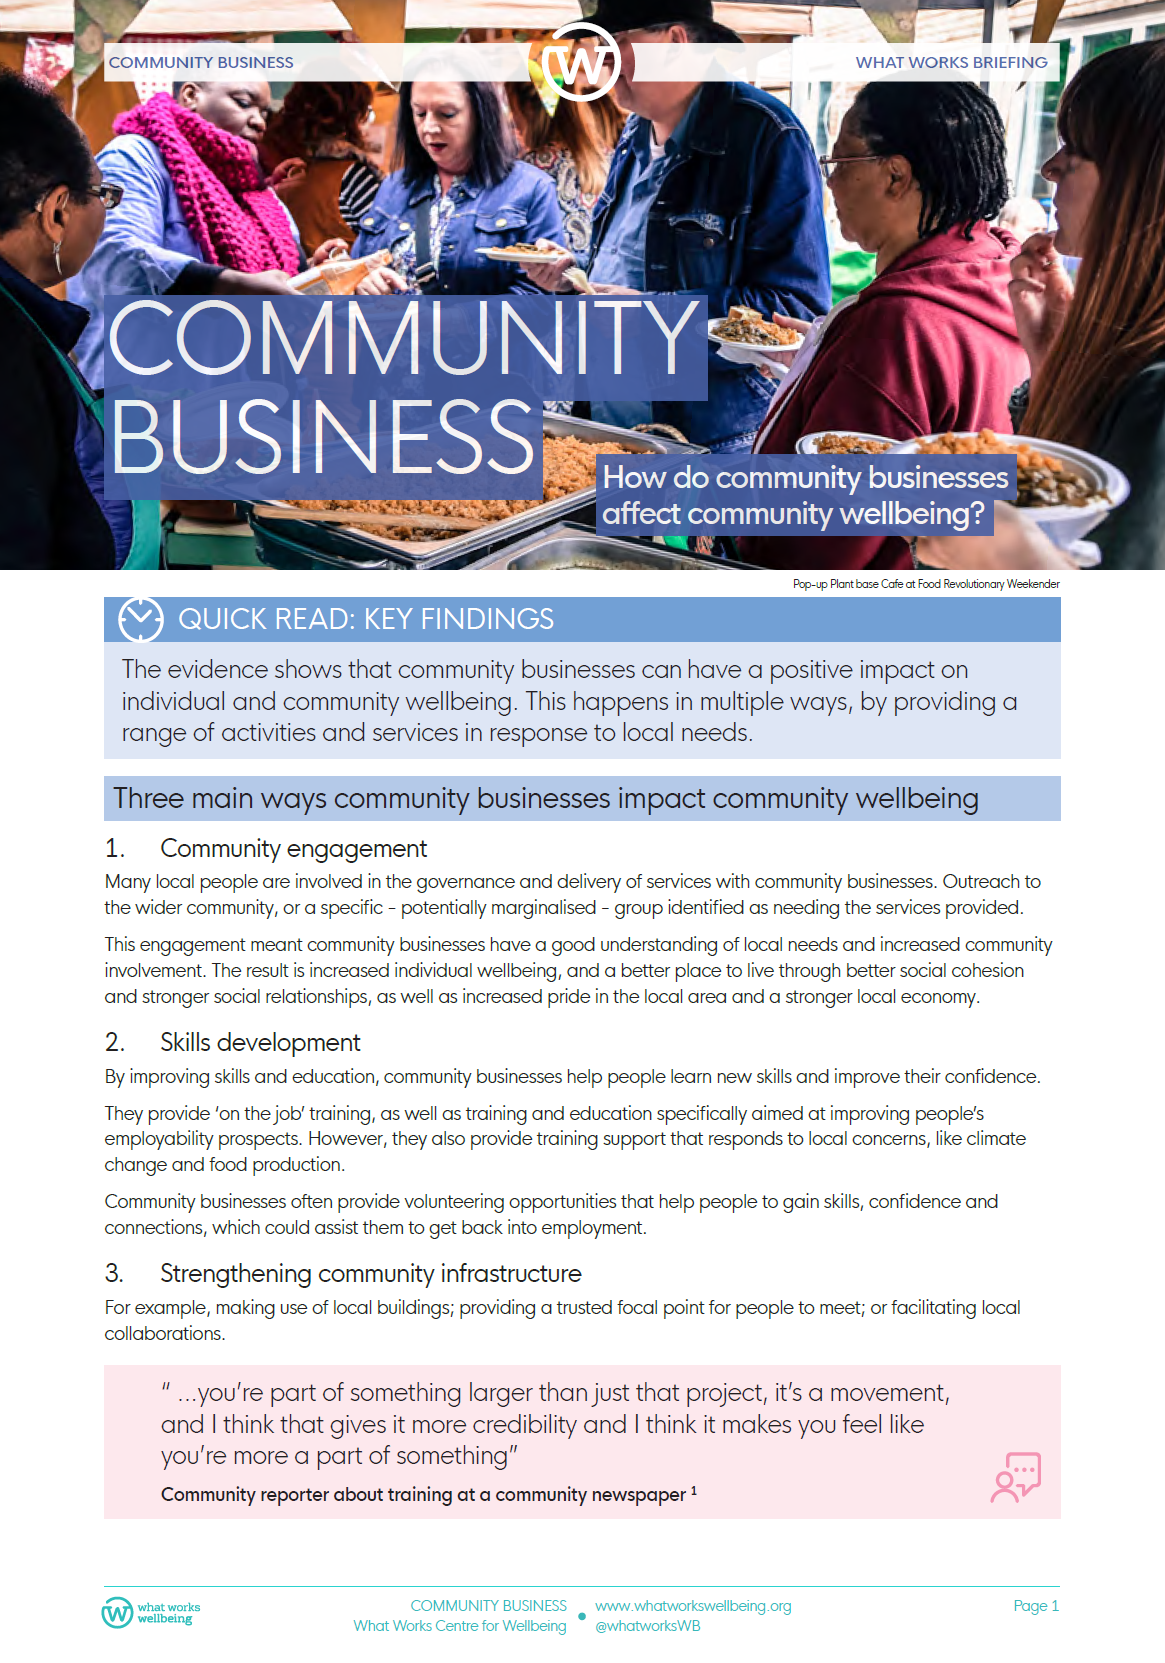 Community business